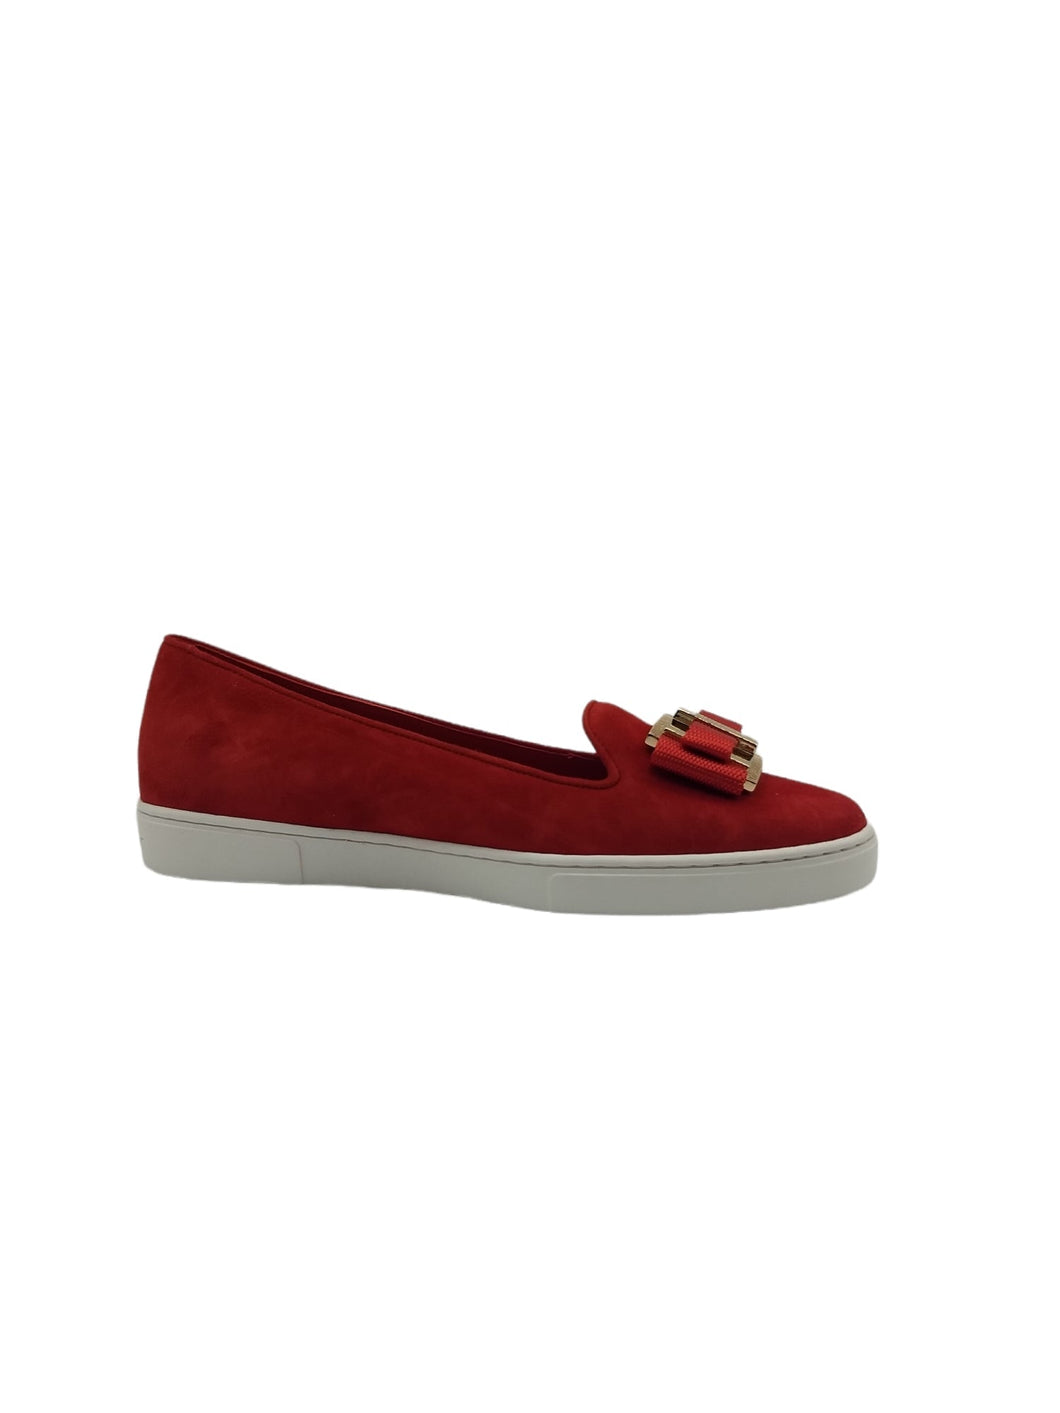 SALVATORE FERRAGAMO Pelagie Women's 672359 Red Flats Size 7 C MSRP $695